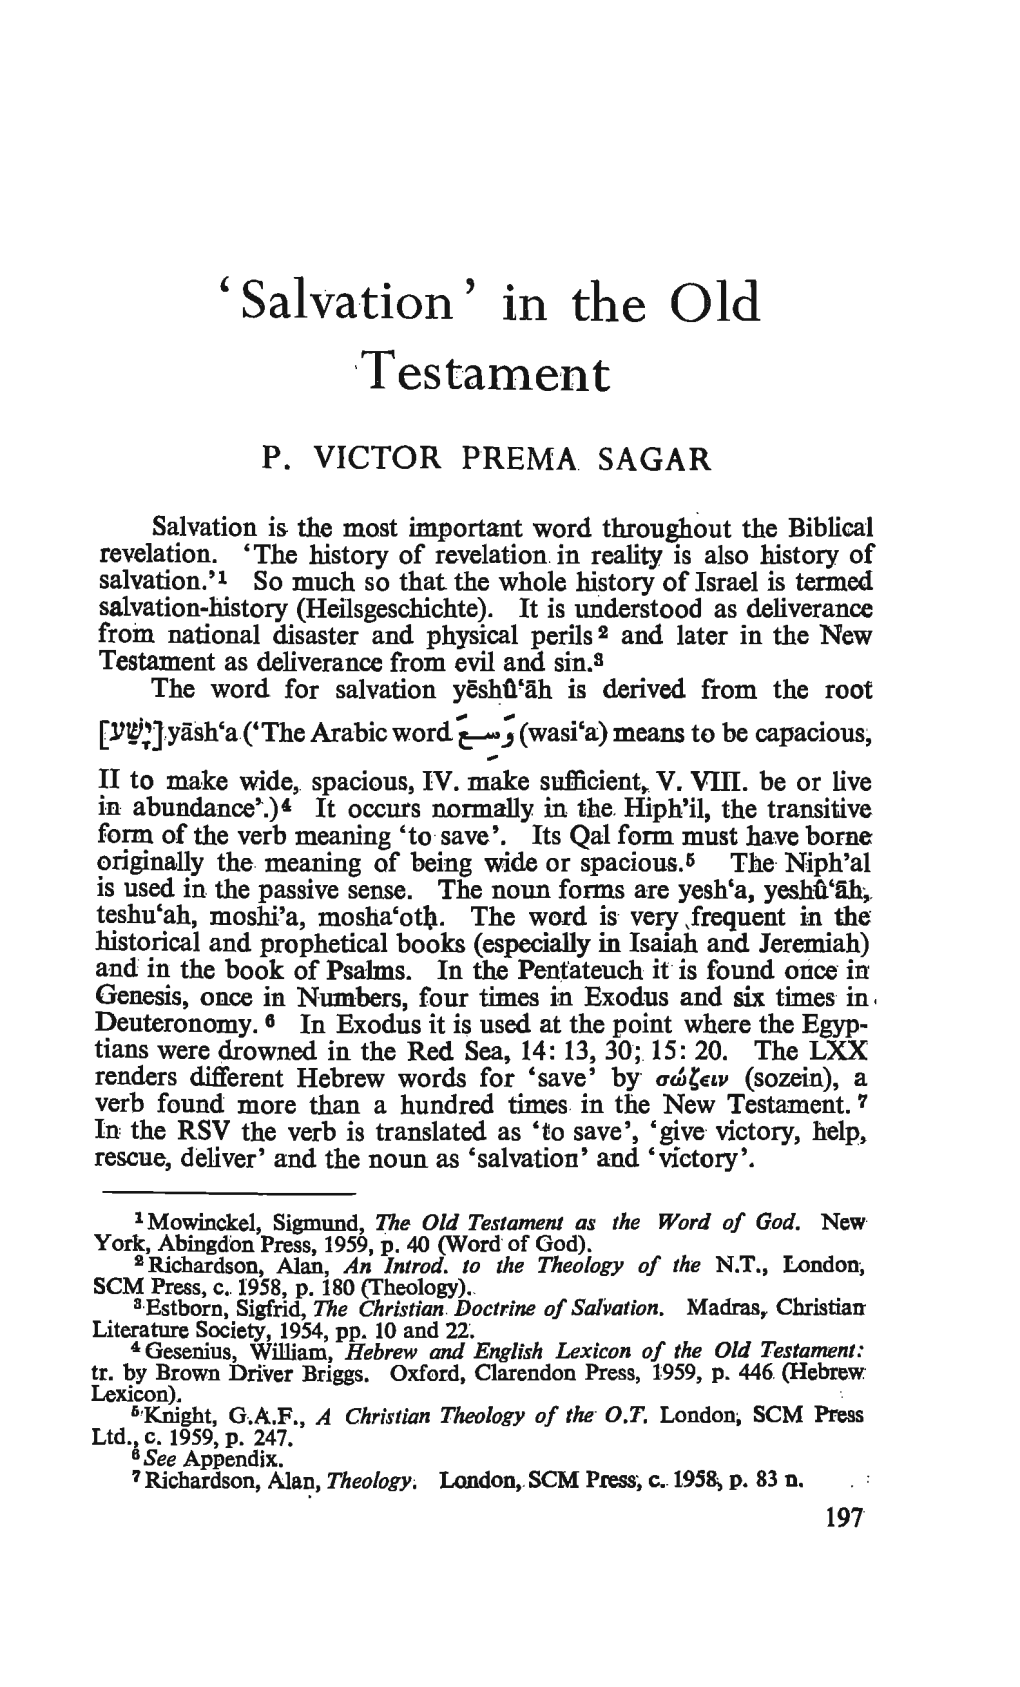 P. Victor Prema Sagar, "'Salvation' in the Old Testament,"